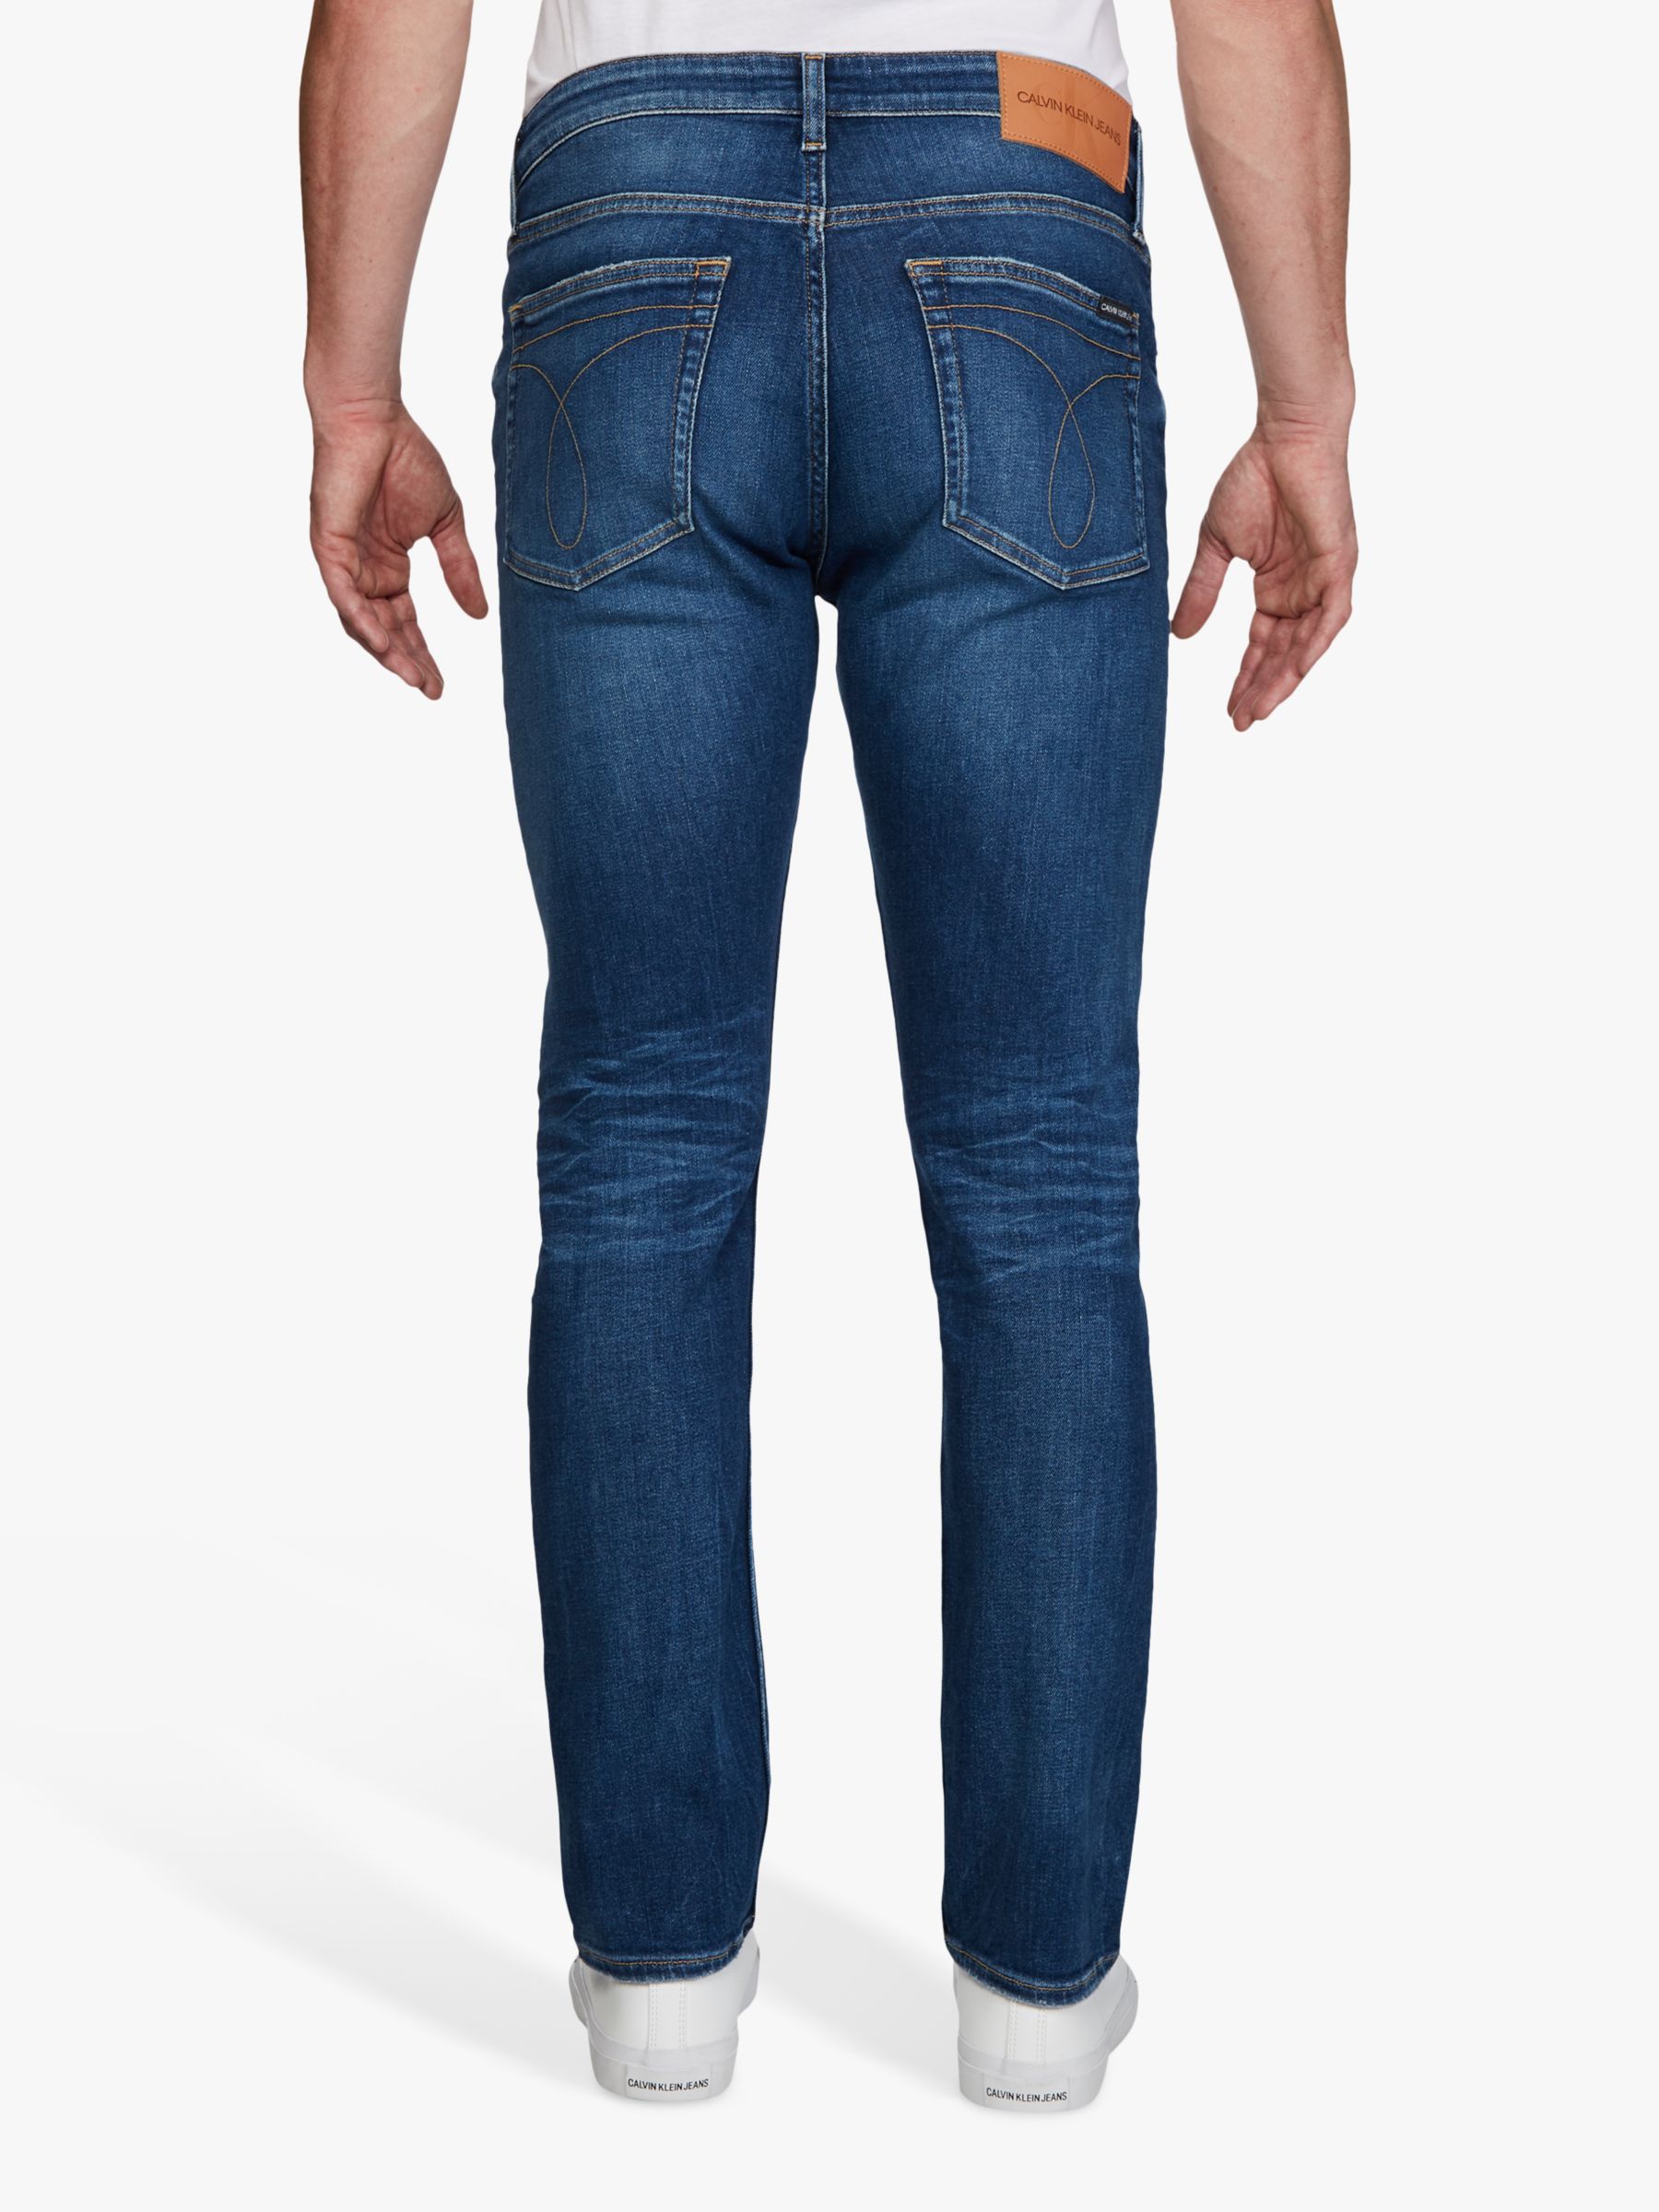 Calvin Klein Jeans 026 Slim Fit Jeans, DA142 Mid Blue at John Lewis ...